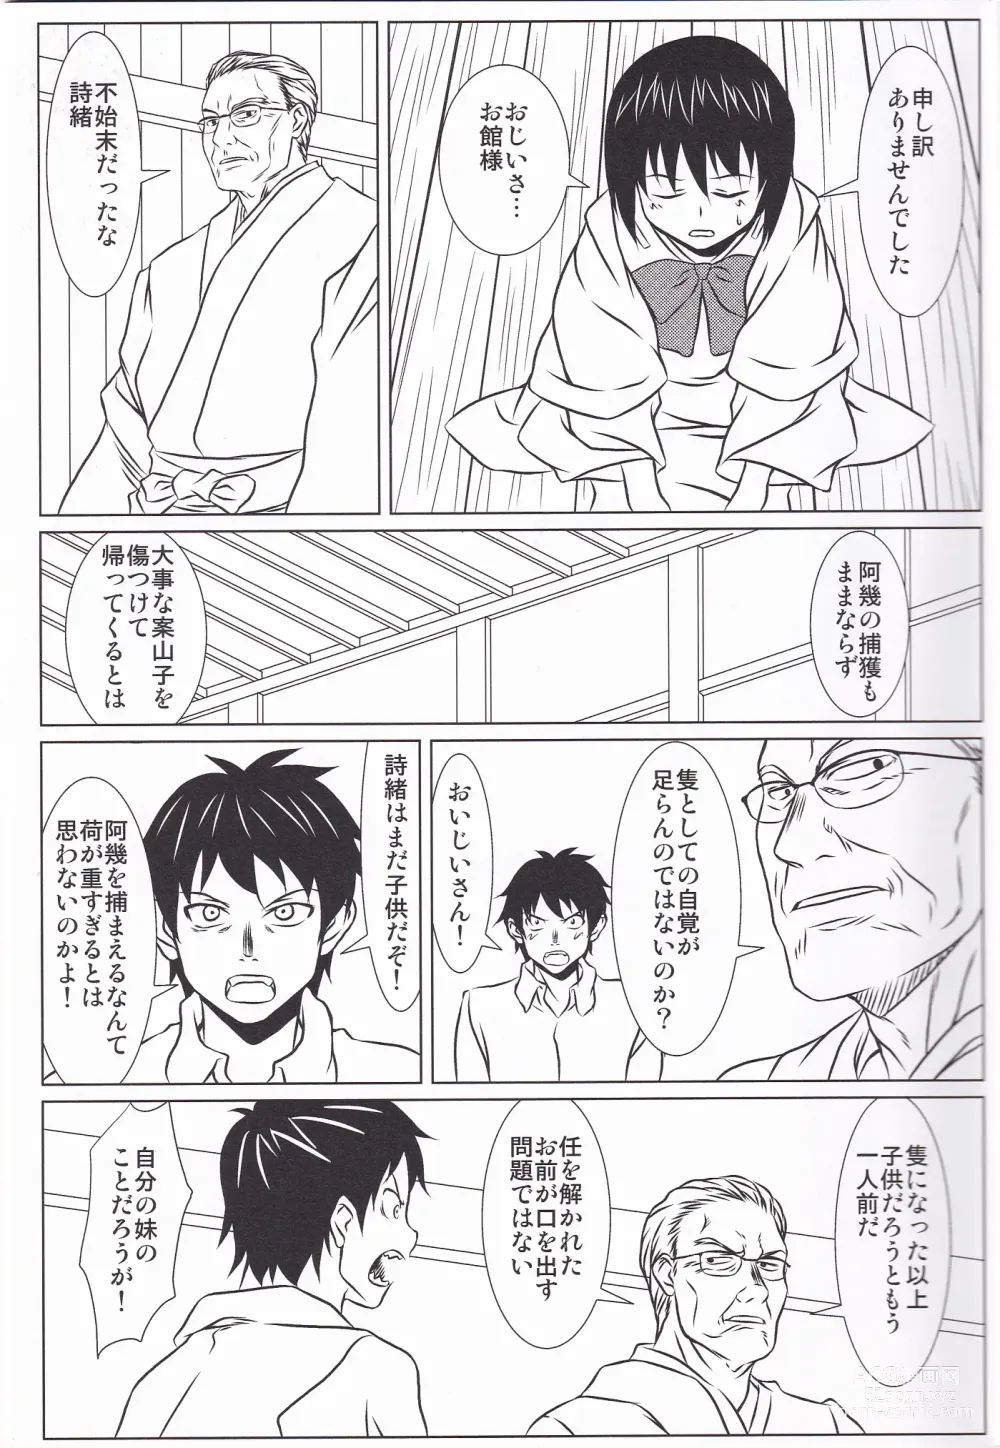 Page 2 of doujinshi Hibi no Uta